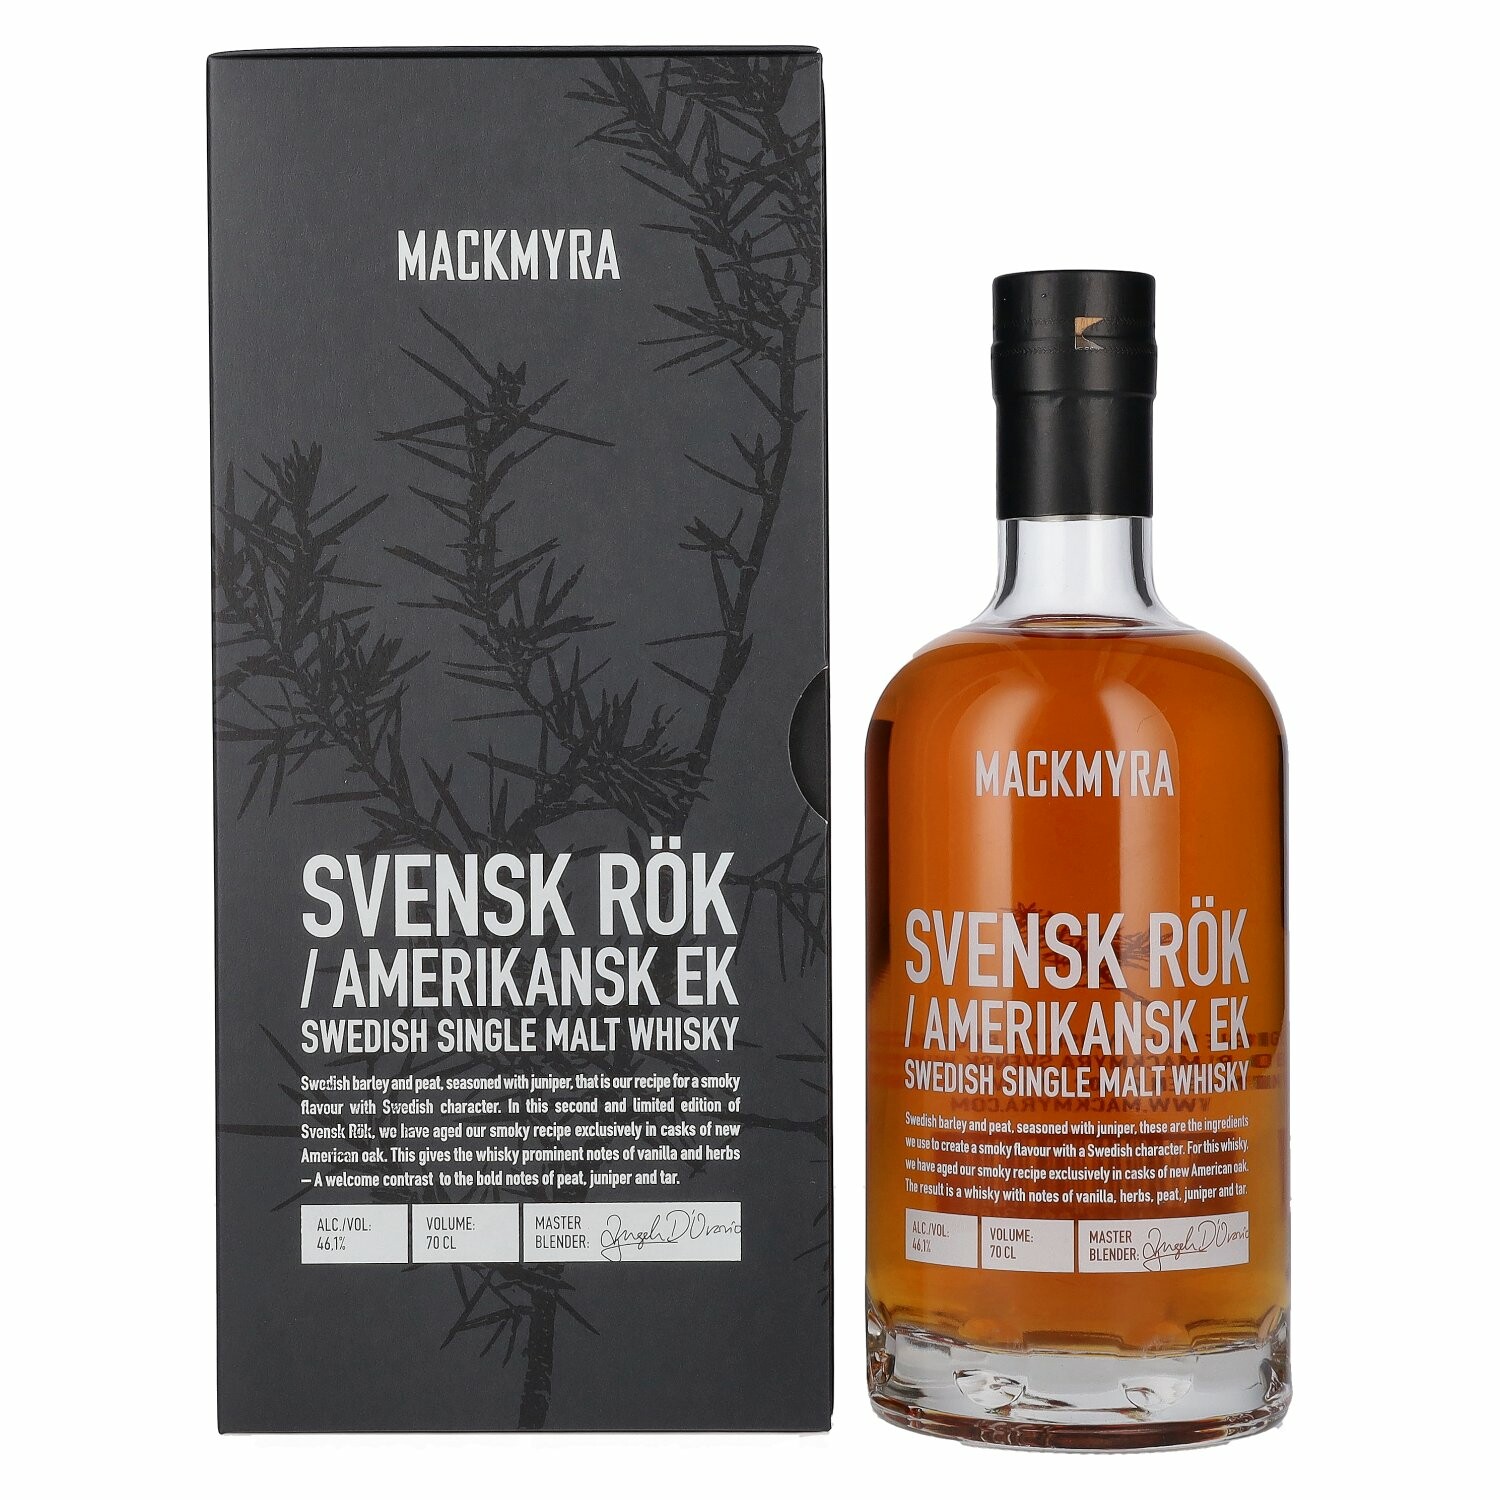 Mackmyra SVENSK RÖK Amerikansk EK Swedish Single Malt Whisky 46,1% Vol. 0,7l in Giftbox